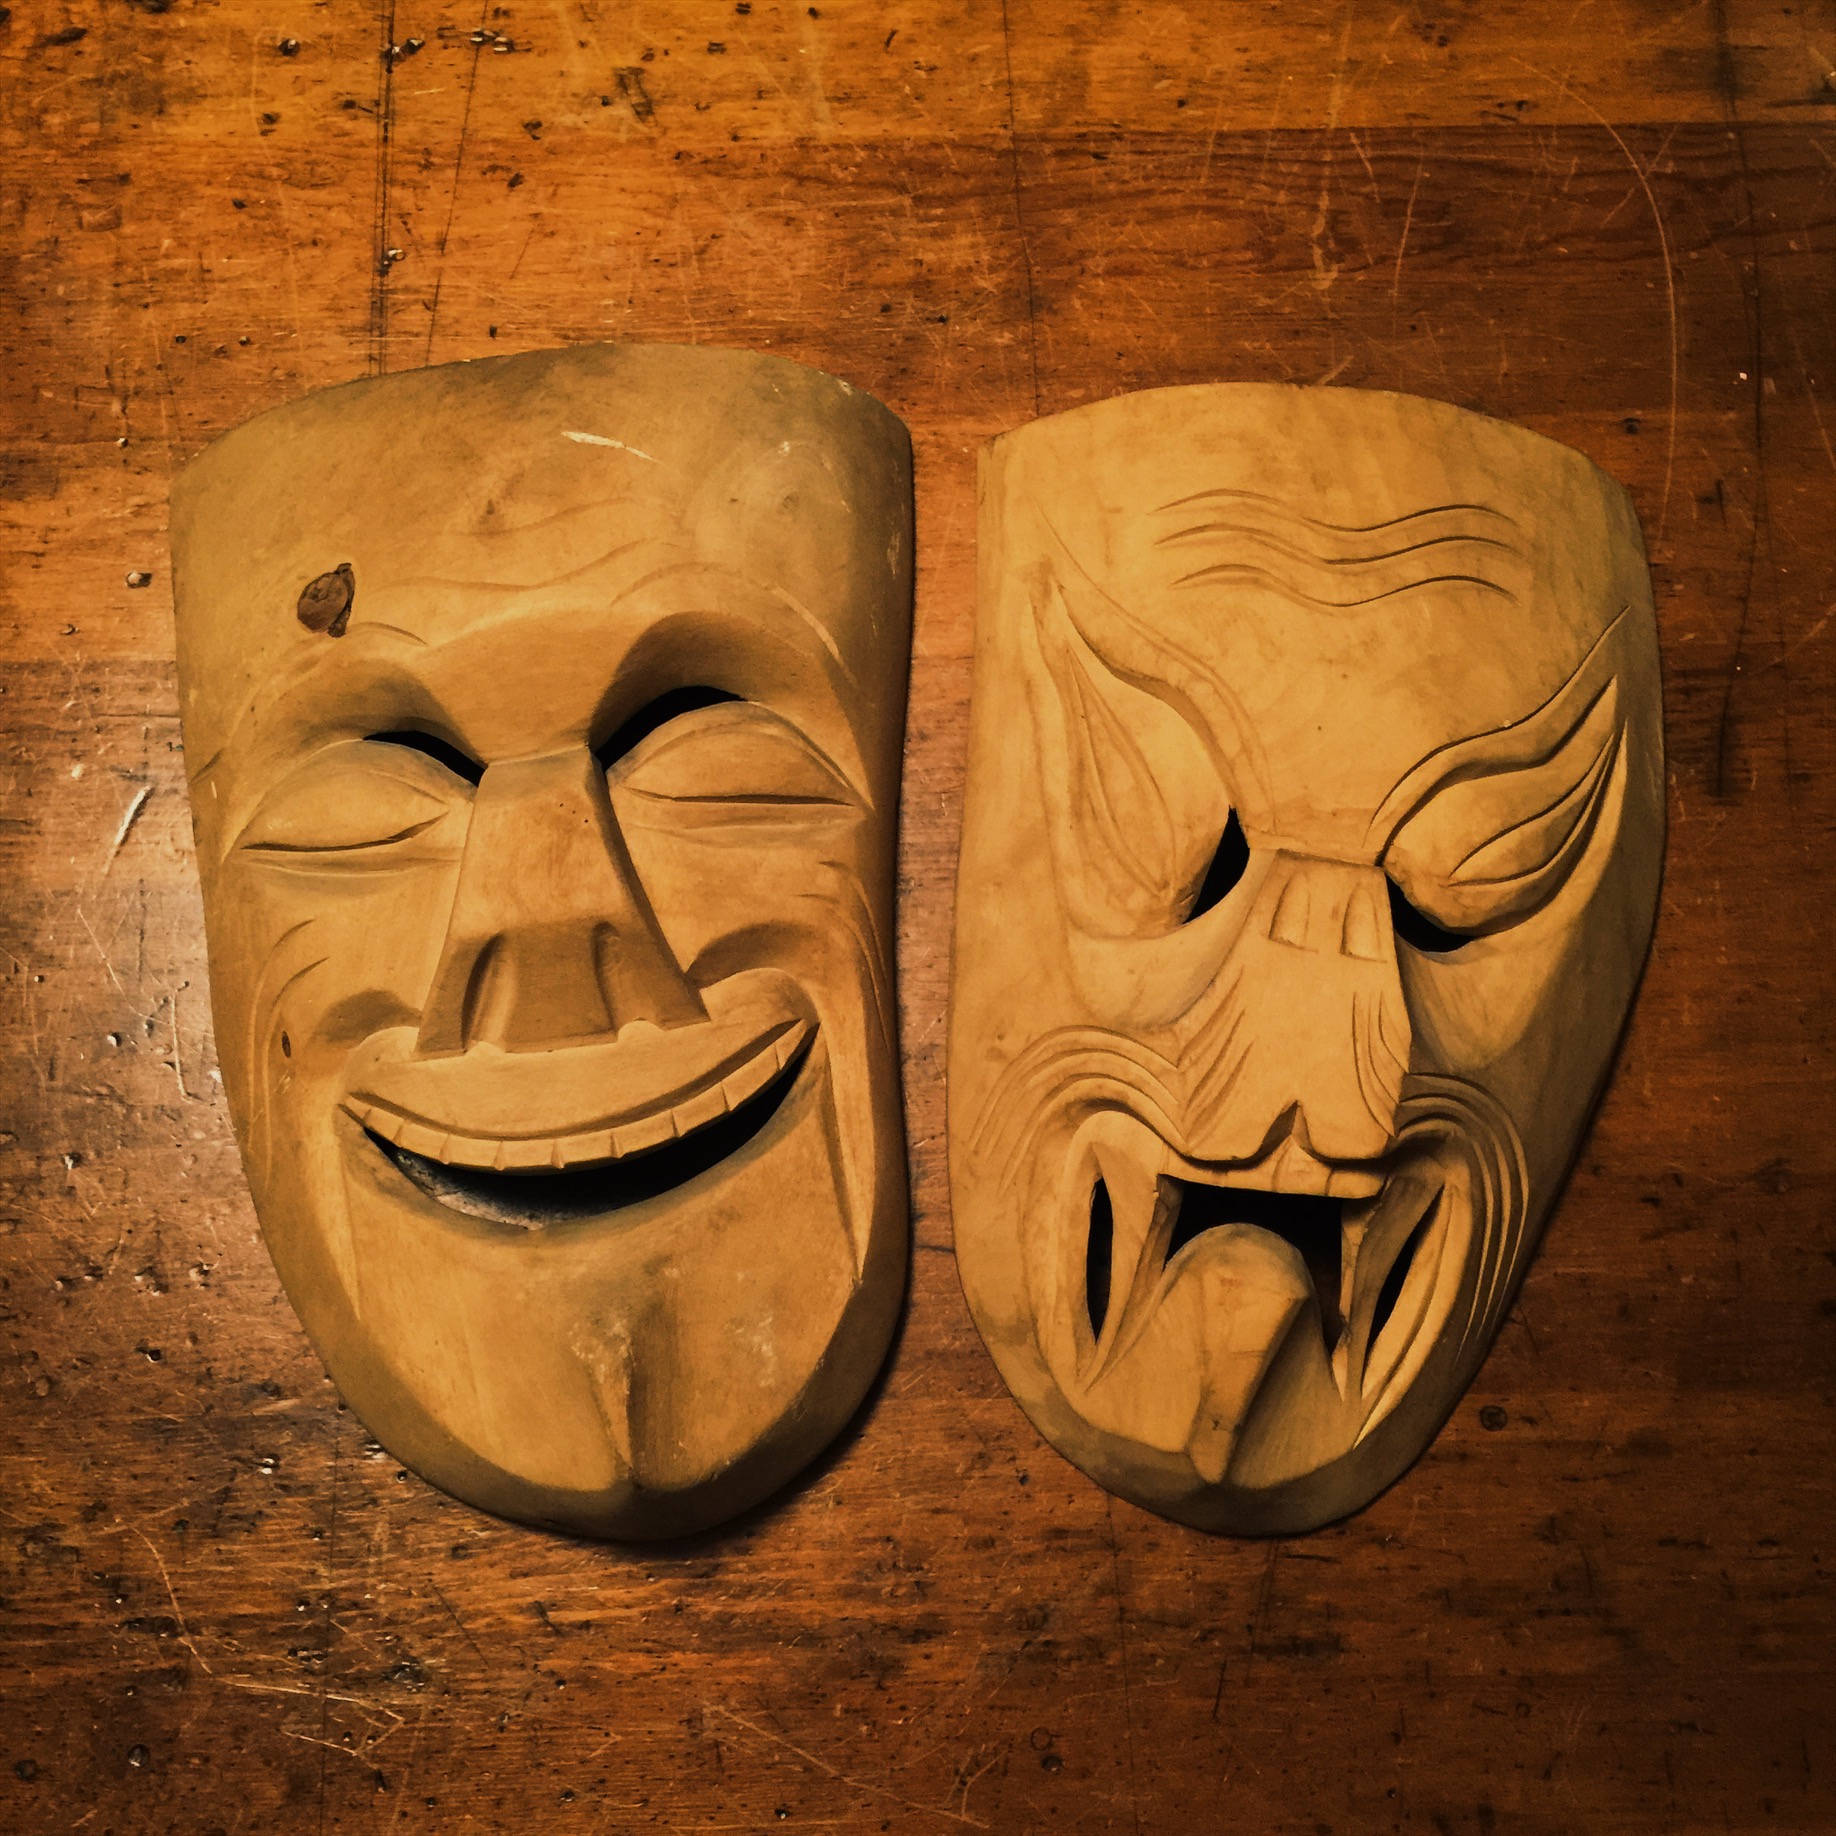 Creepy Comedy Tragedy Wood Masks - Hand Carved - Vintage Wall Art - Unusual Folk Art - Woodworking Art - Creepy wood masks